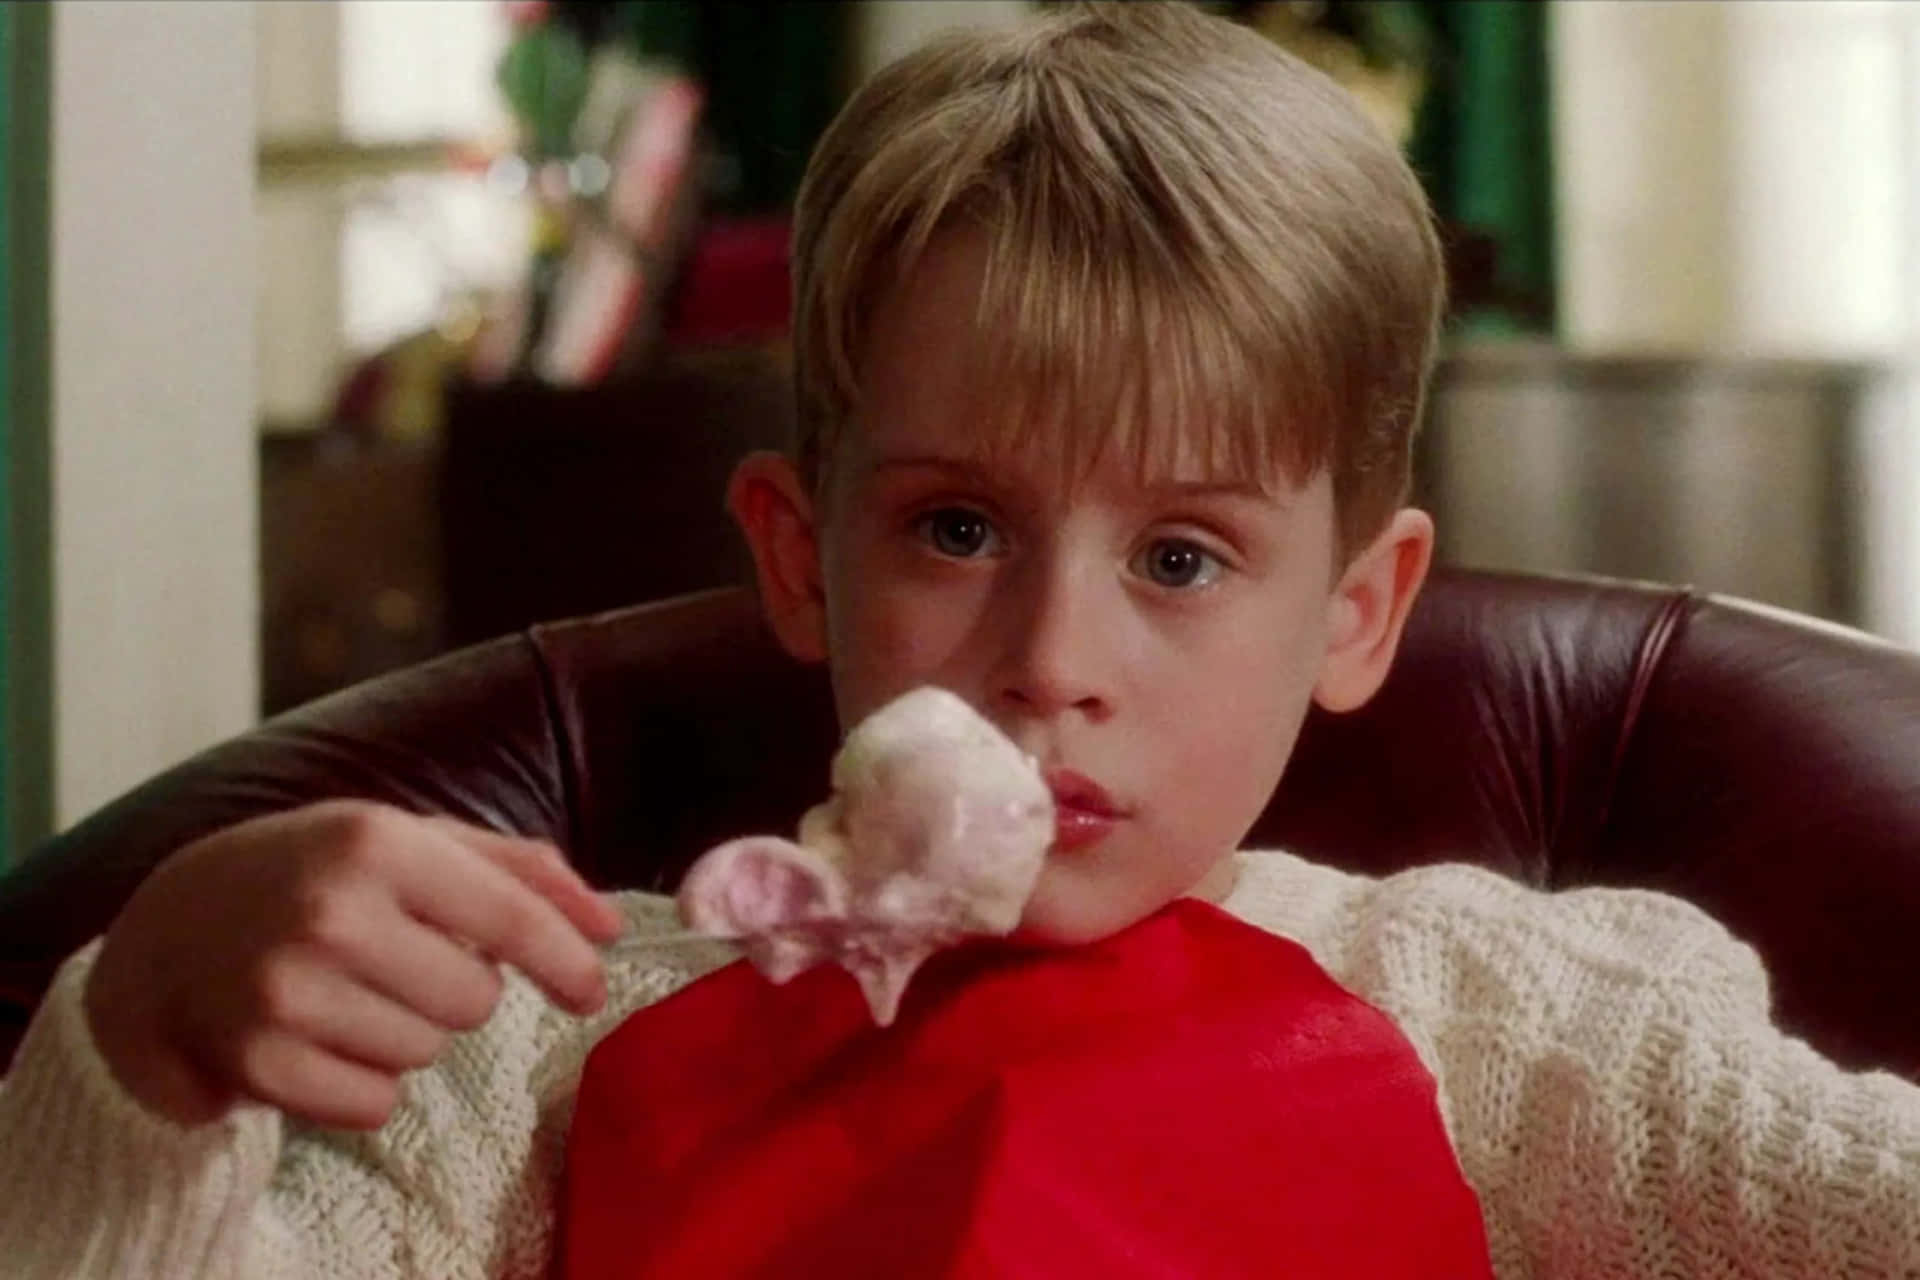 A Young Boy Eating A Ice Cream Cone